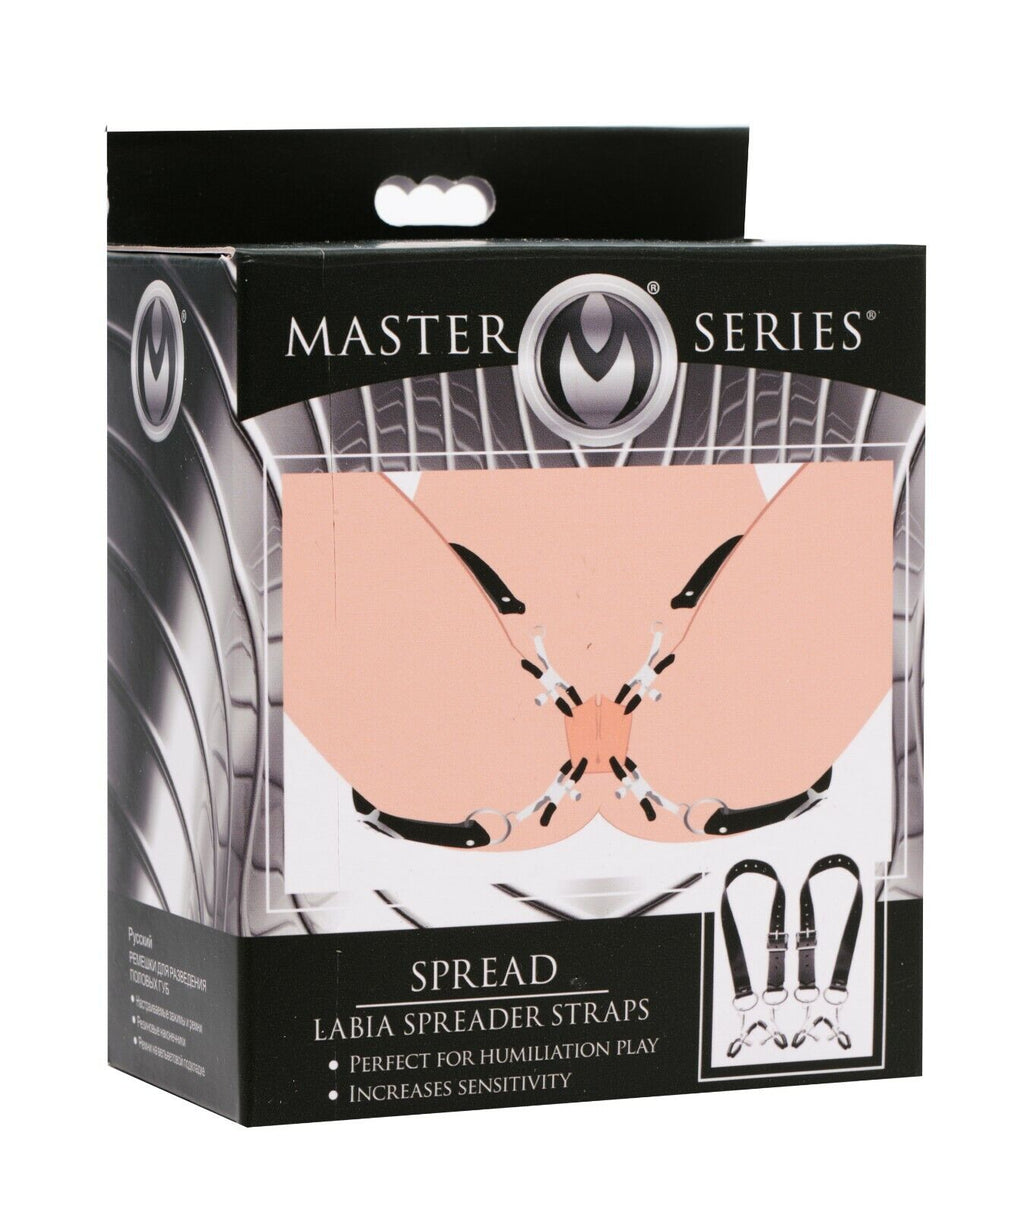 Master Series Spread Labia Spreader Straps - Black